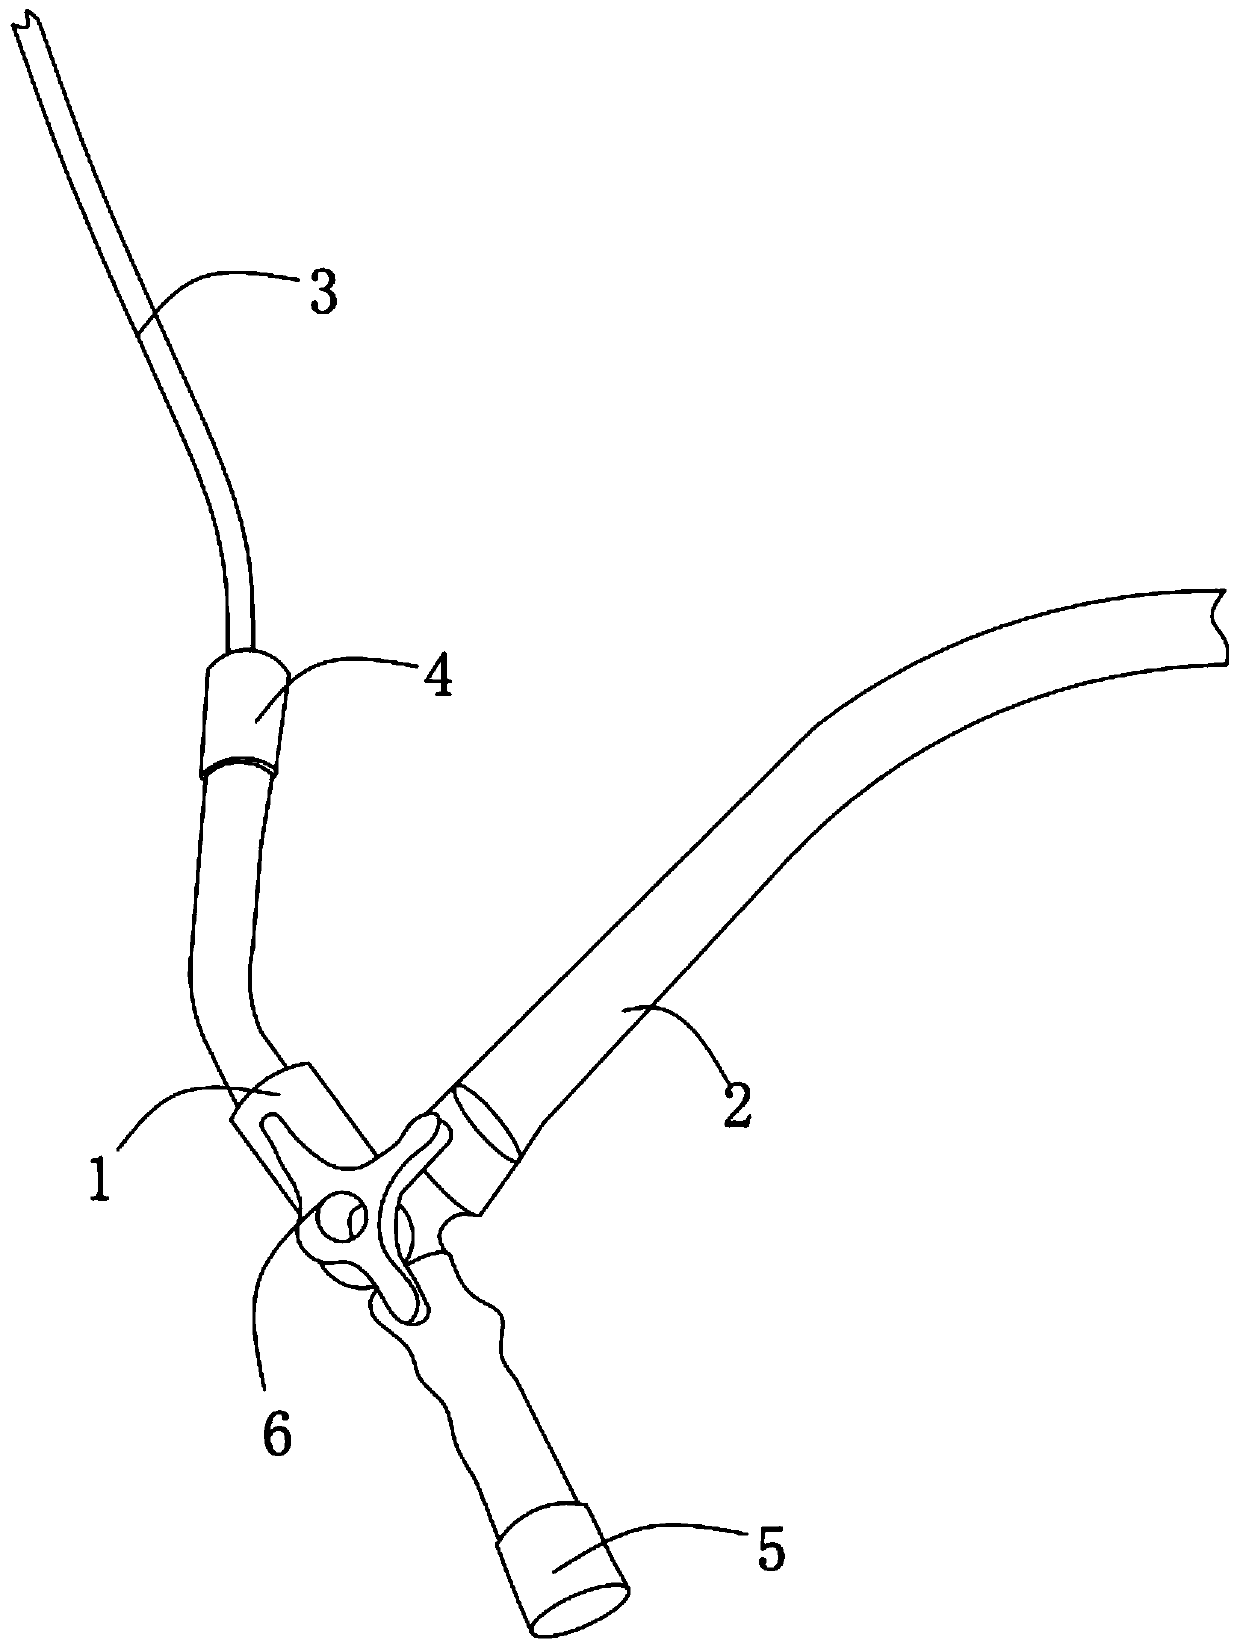 Continuous negative-pressure suction apparatus for ureteroscopic holmium laser lithotripsy use